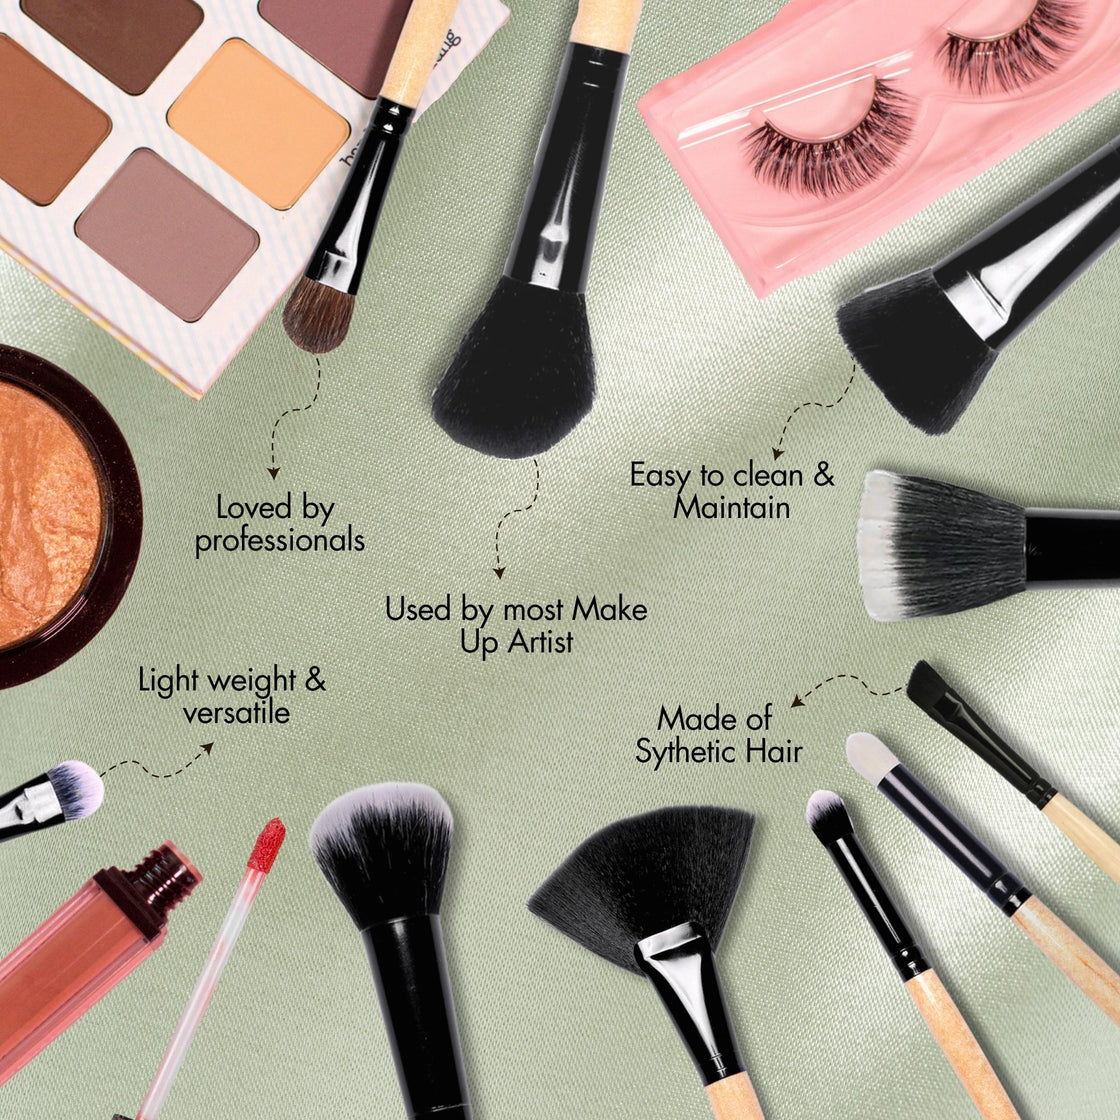 Allure Eye Shadow and Angular Makeup Brush